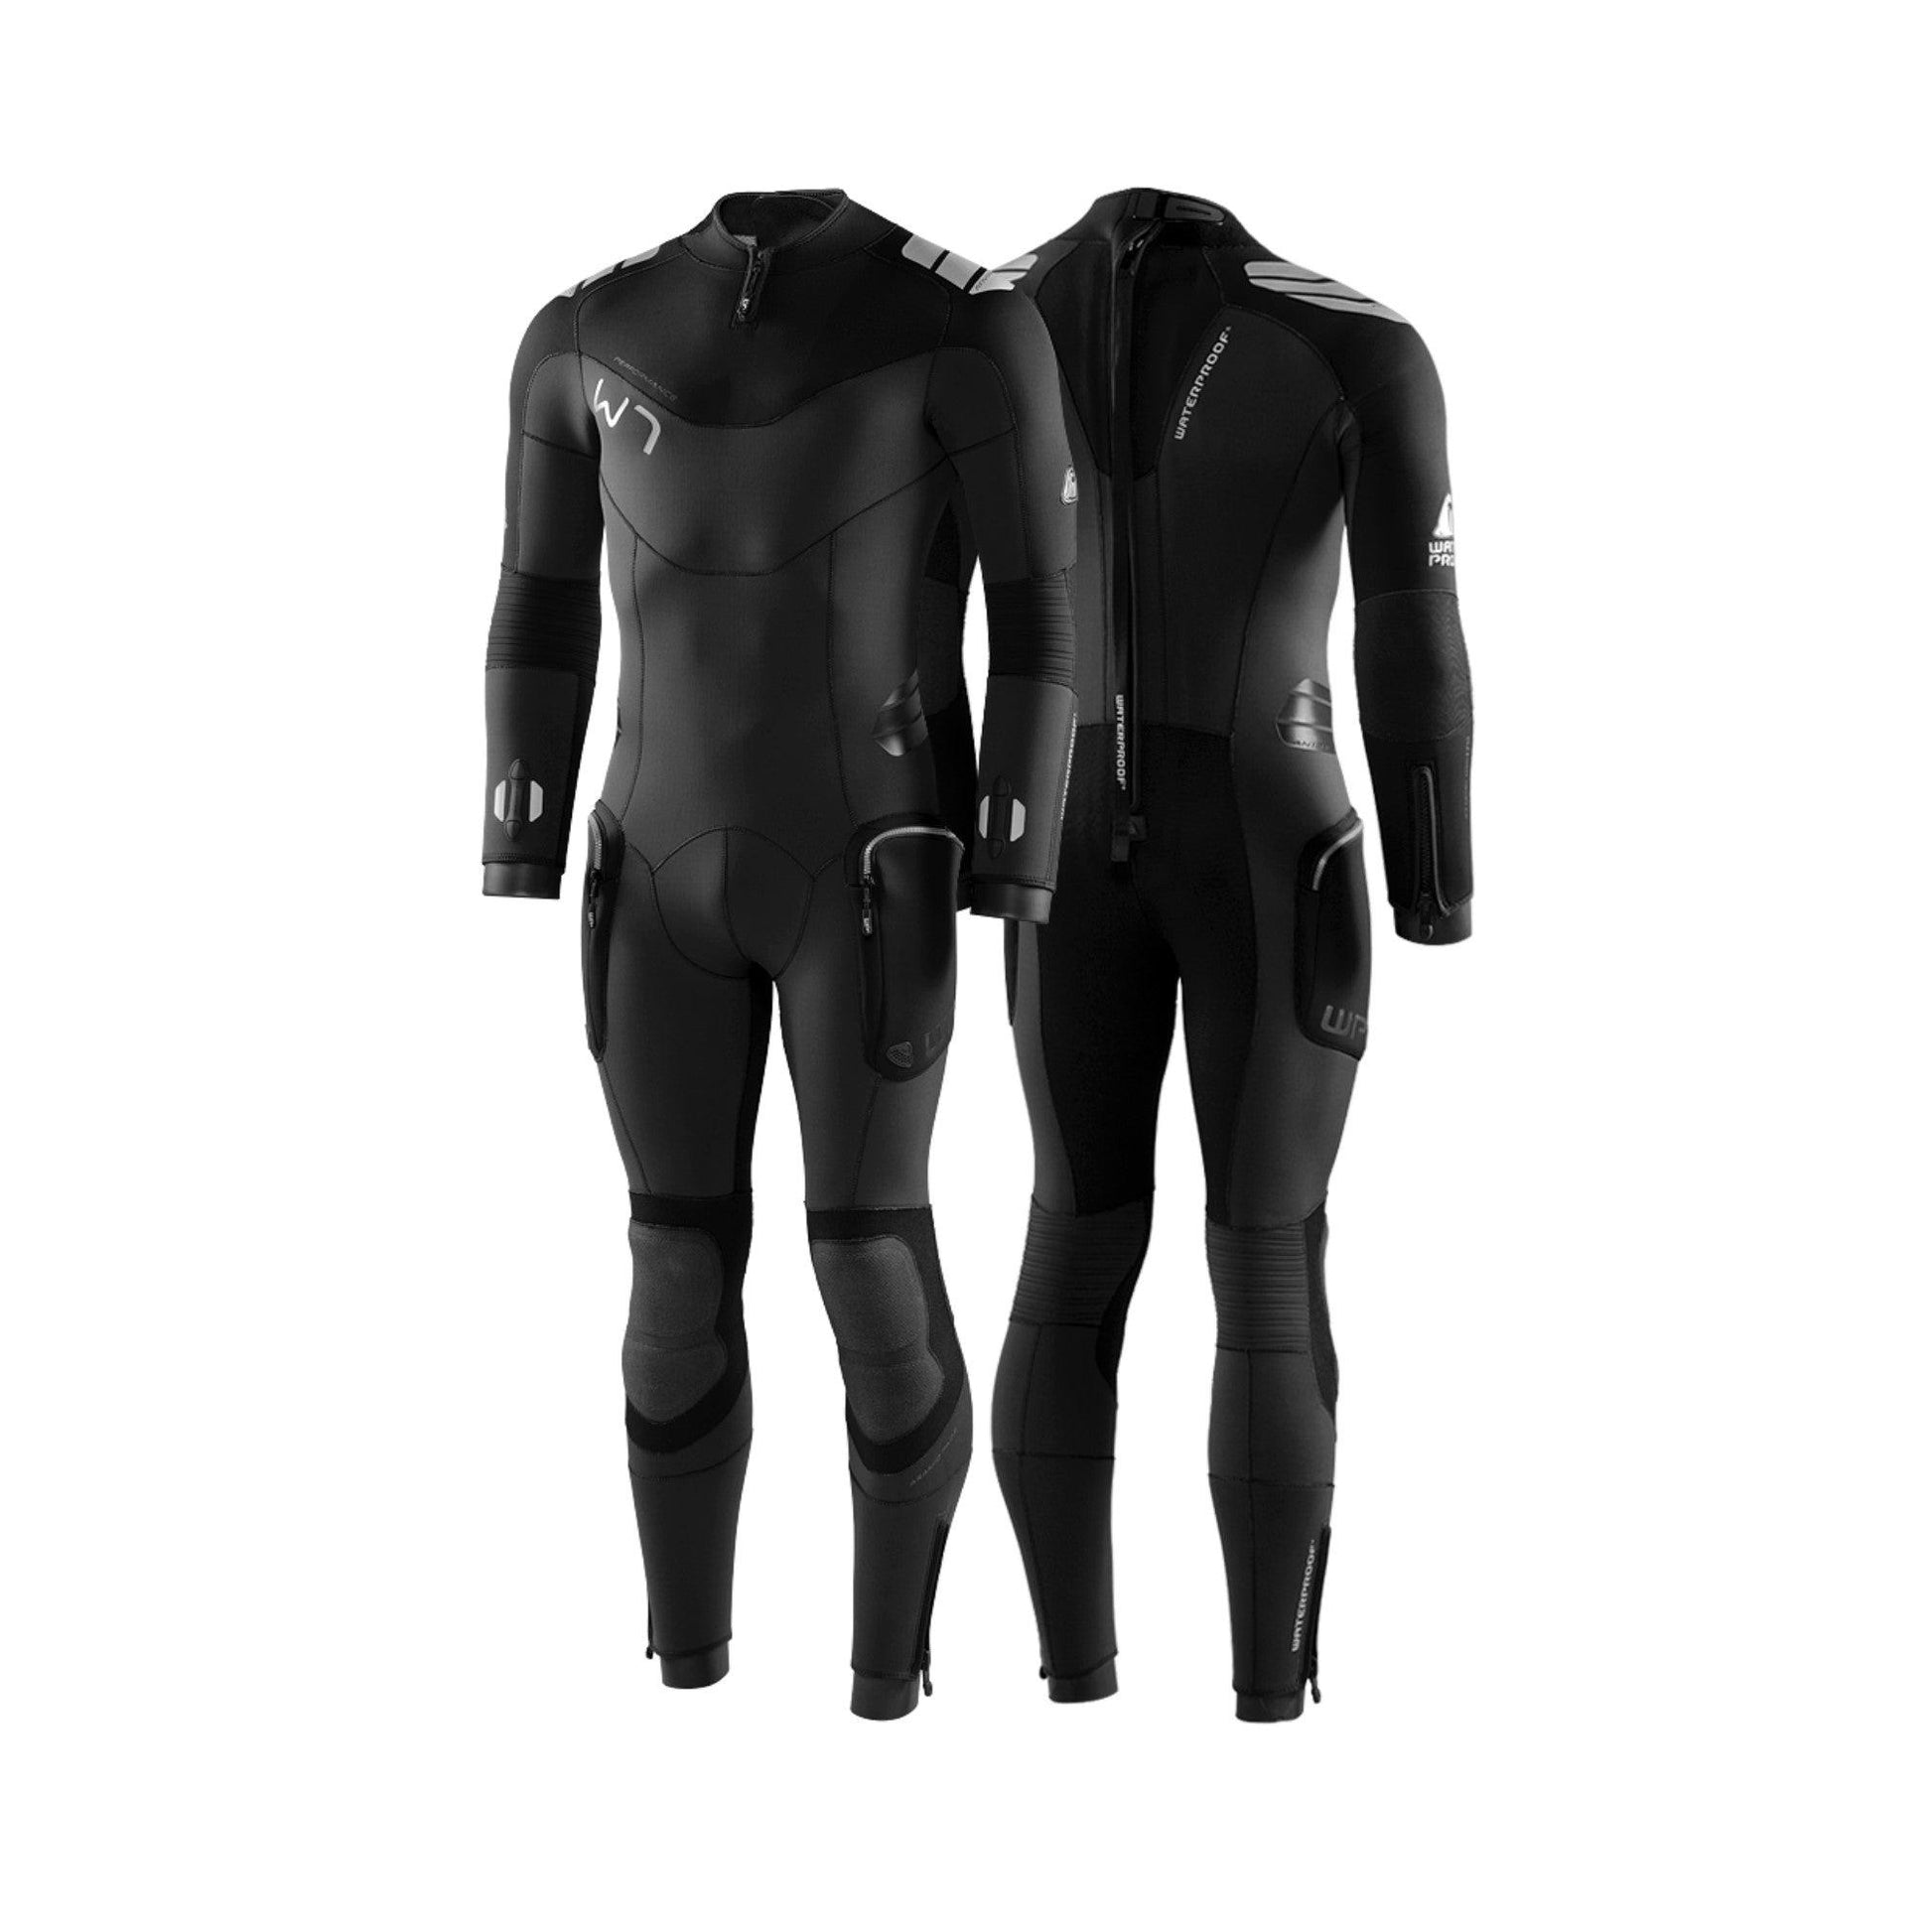 Waterproof W7 5mm Men's Wetsuit